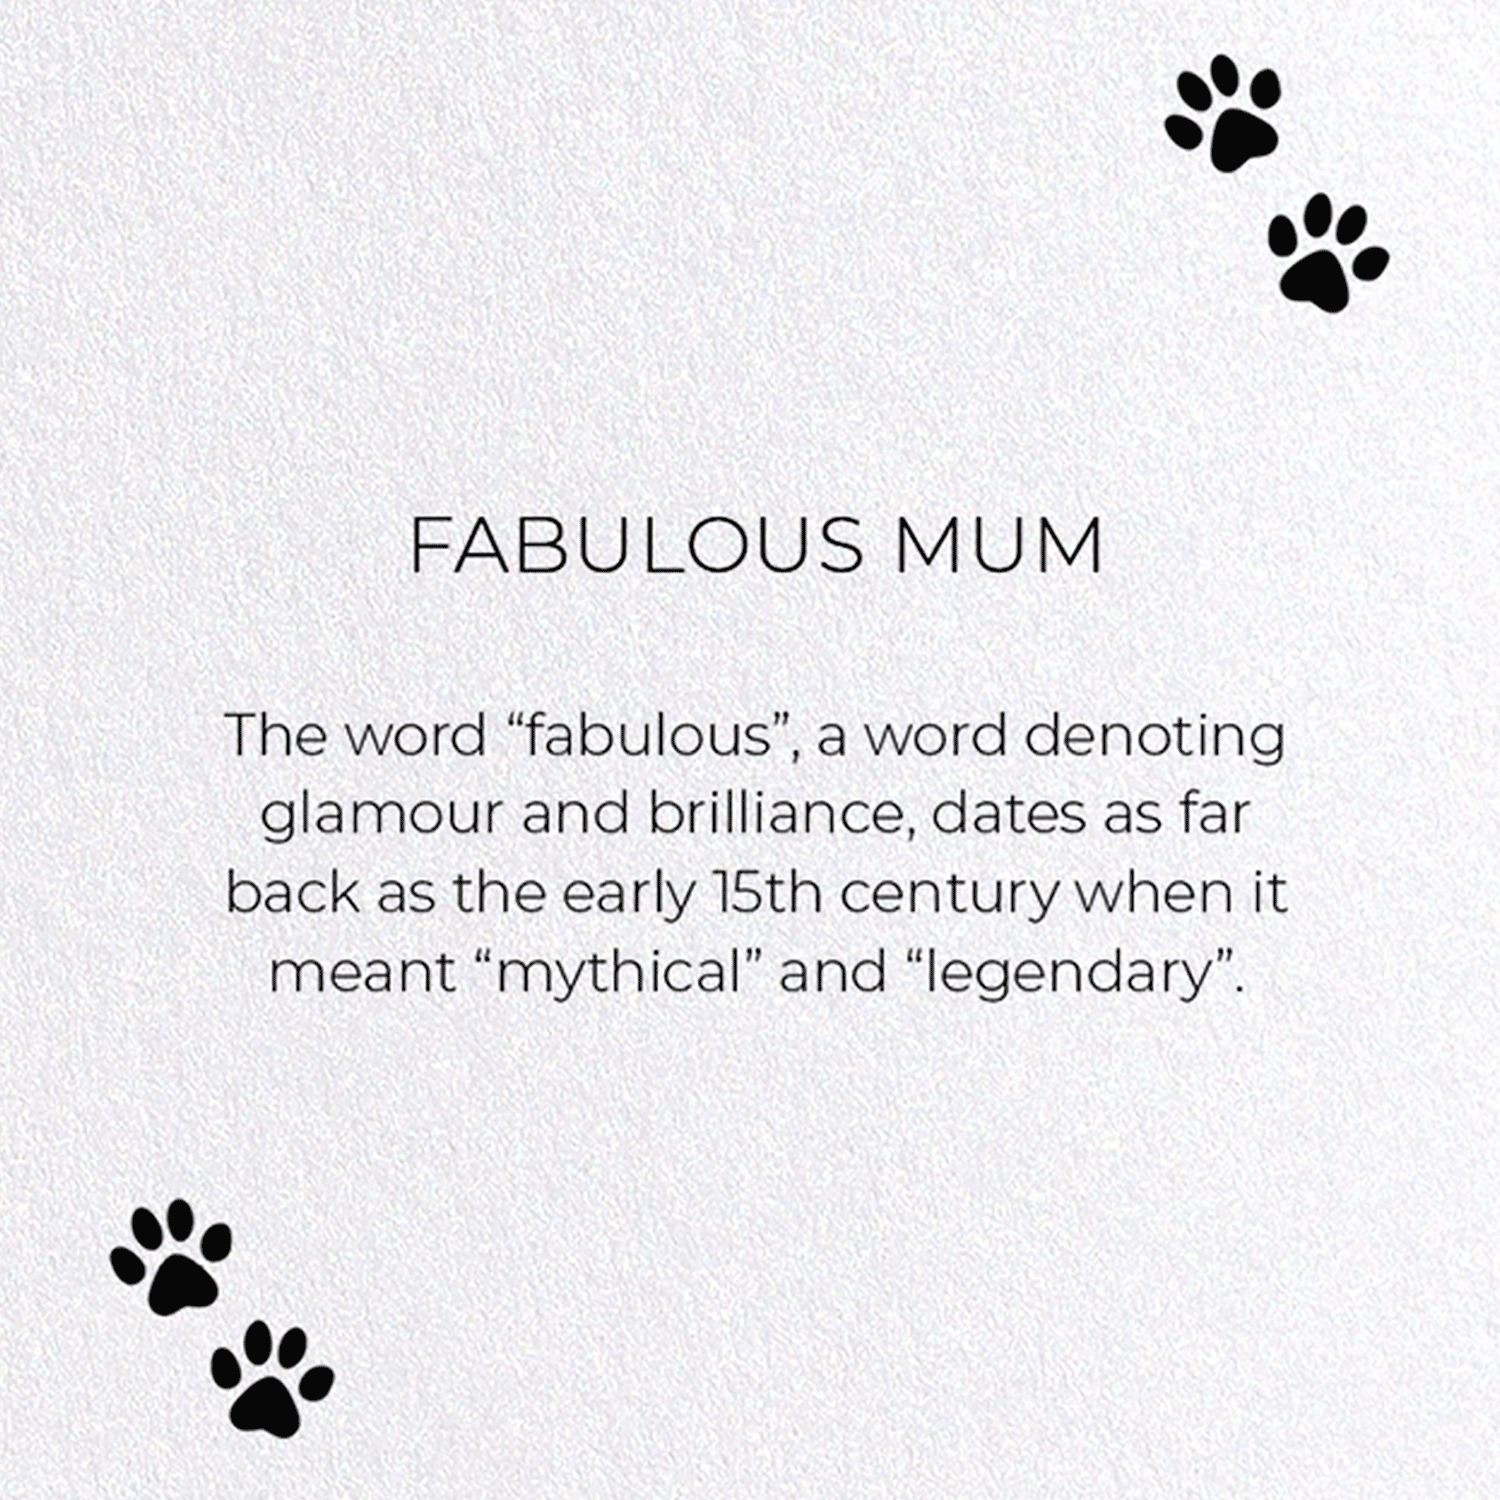 FABULOUS MUM: Funny Animal Greeting Card